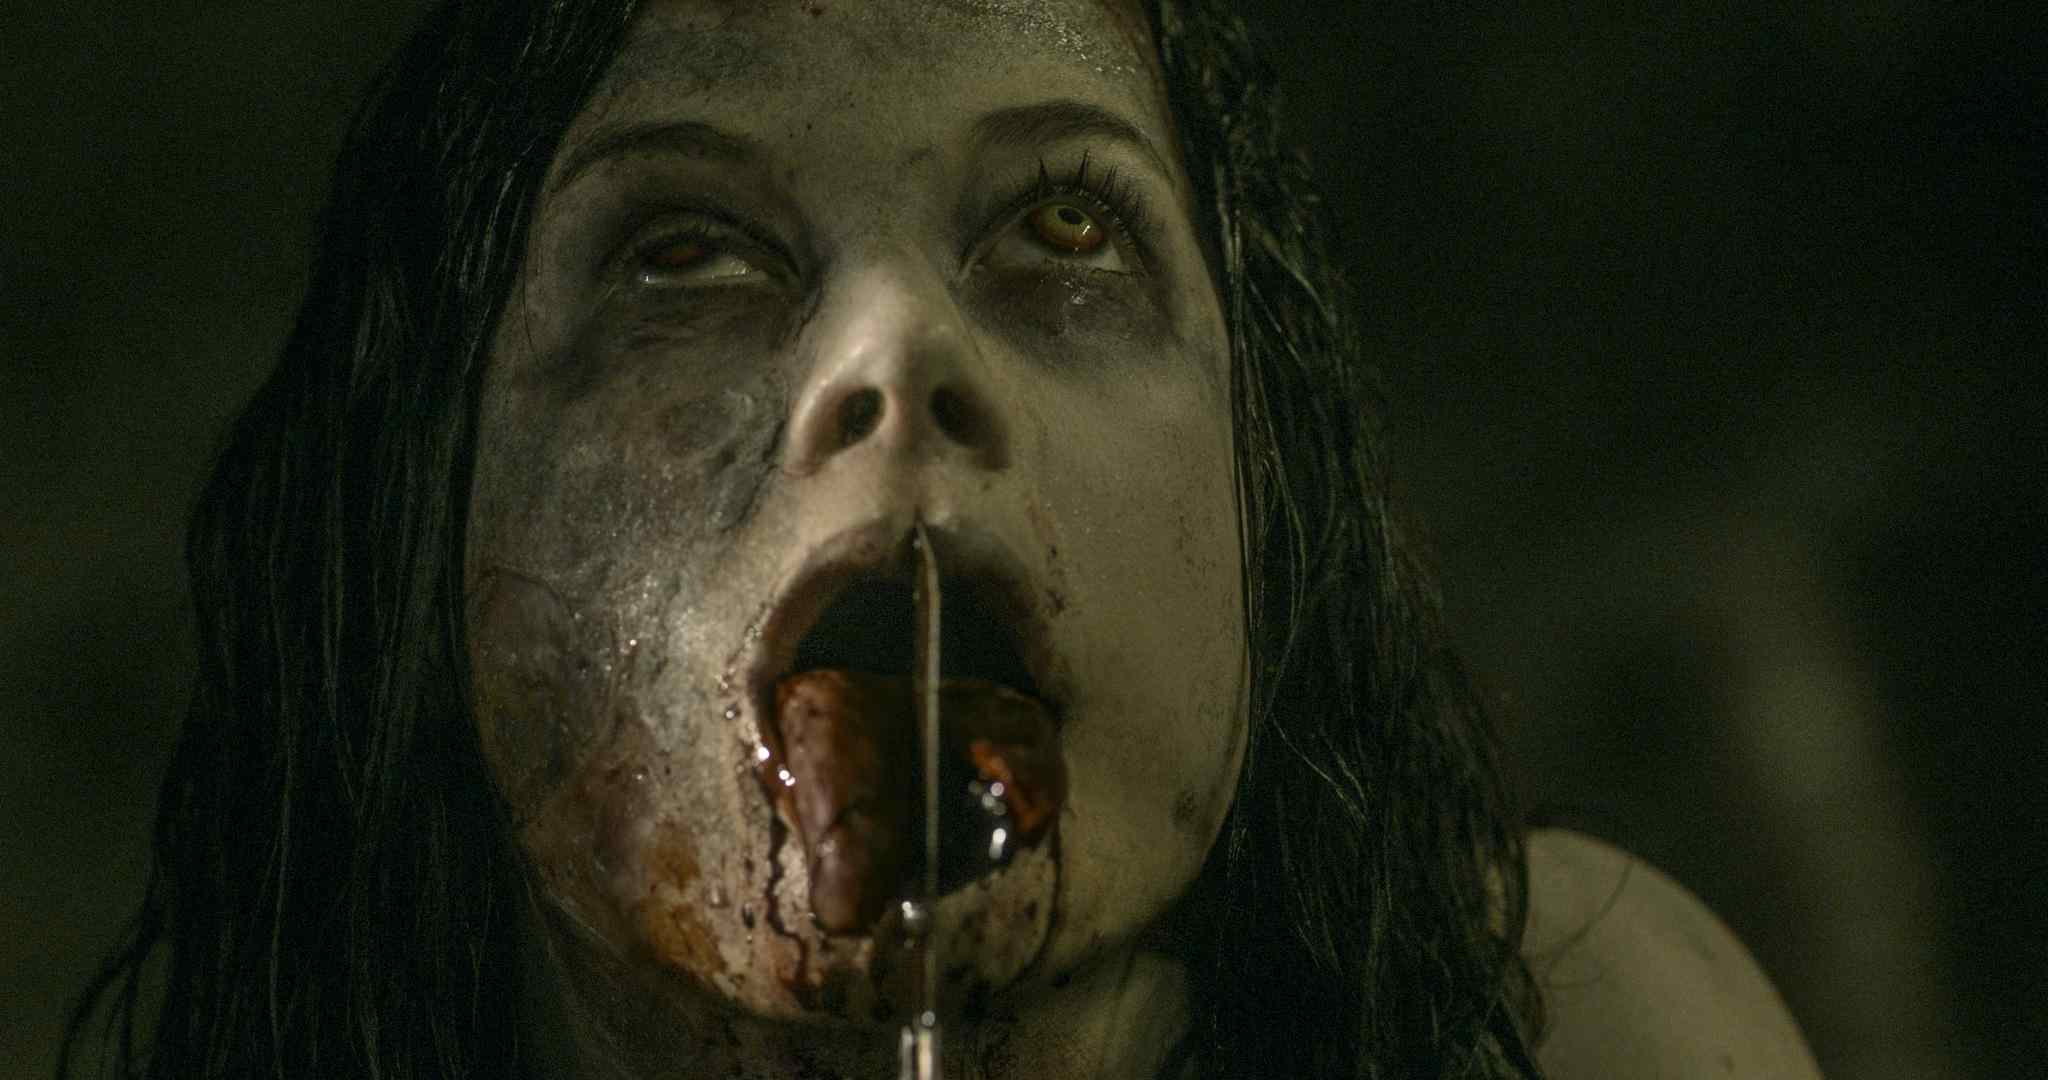 Evil Dead 2013 Ending Explained, Plot, Cast, Review And More - News